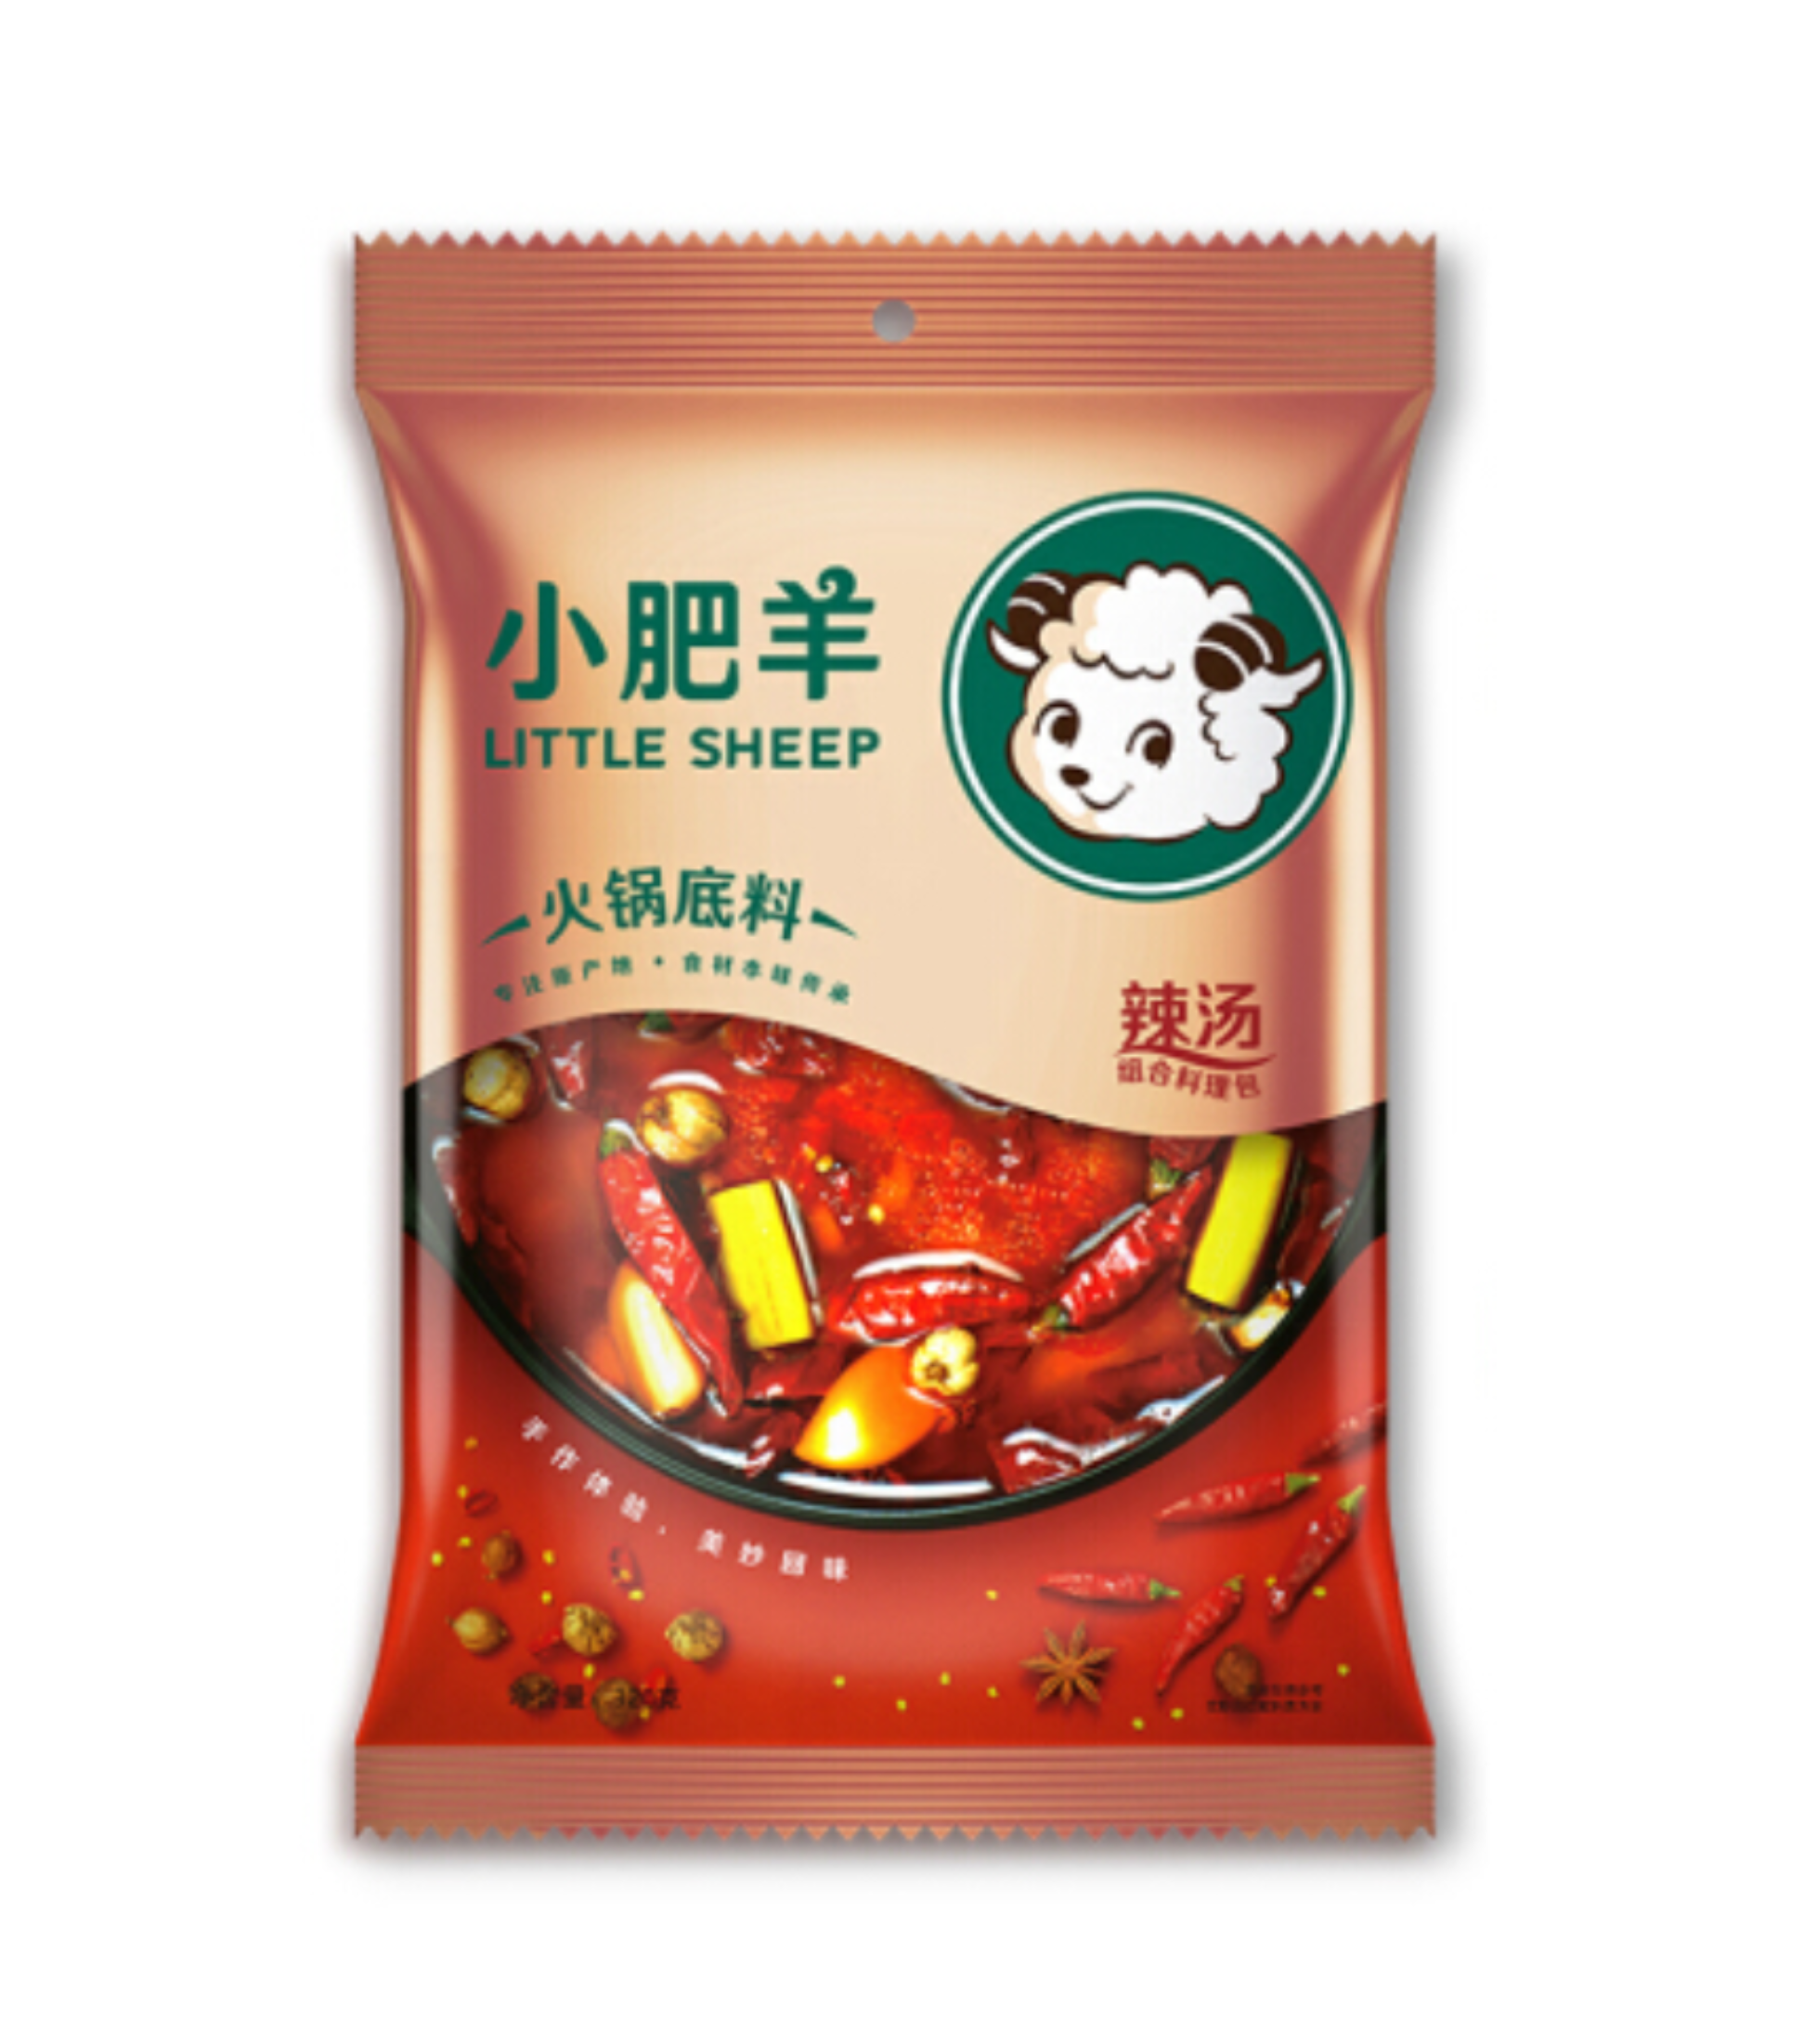 Little Sheep  Hot pot soep basis heet (小肥羊 火锅底料 辣汤)